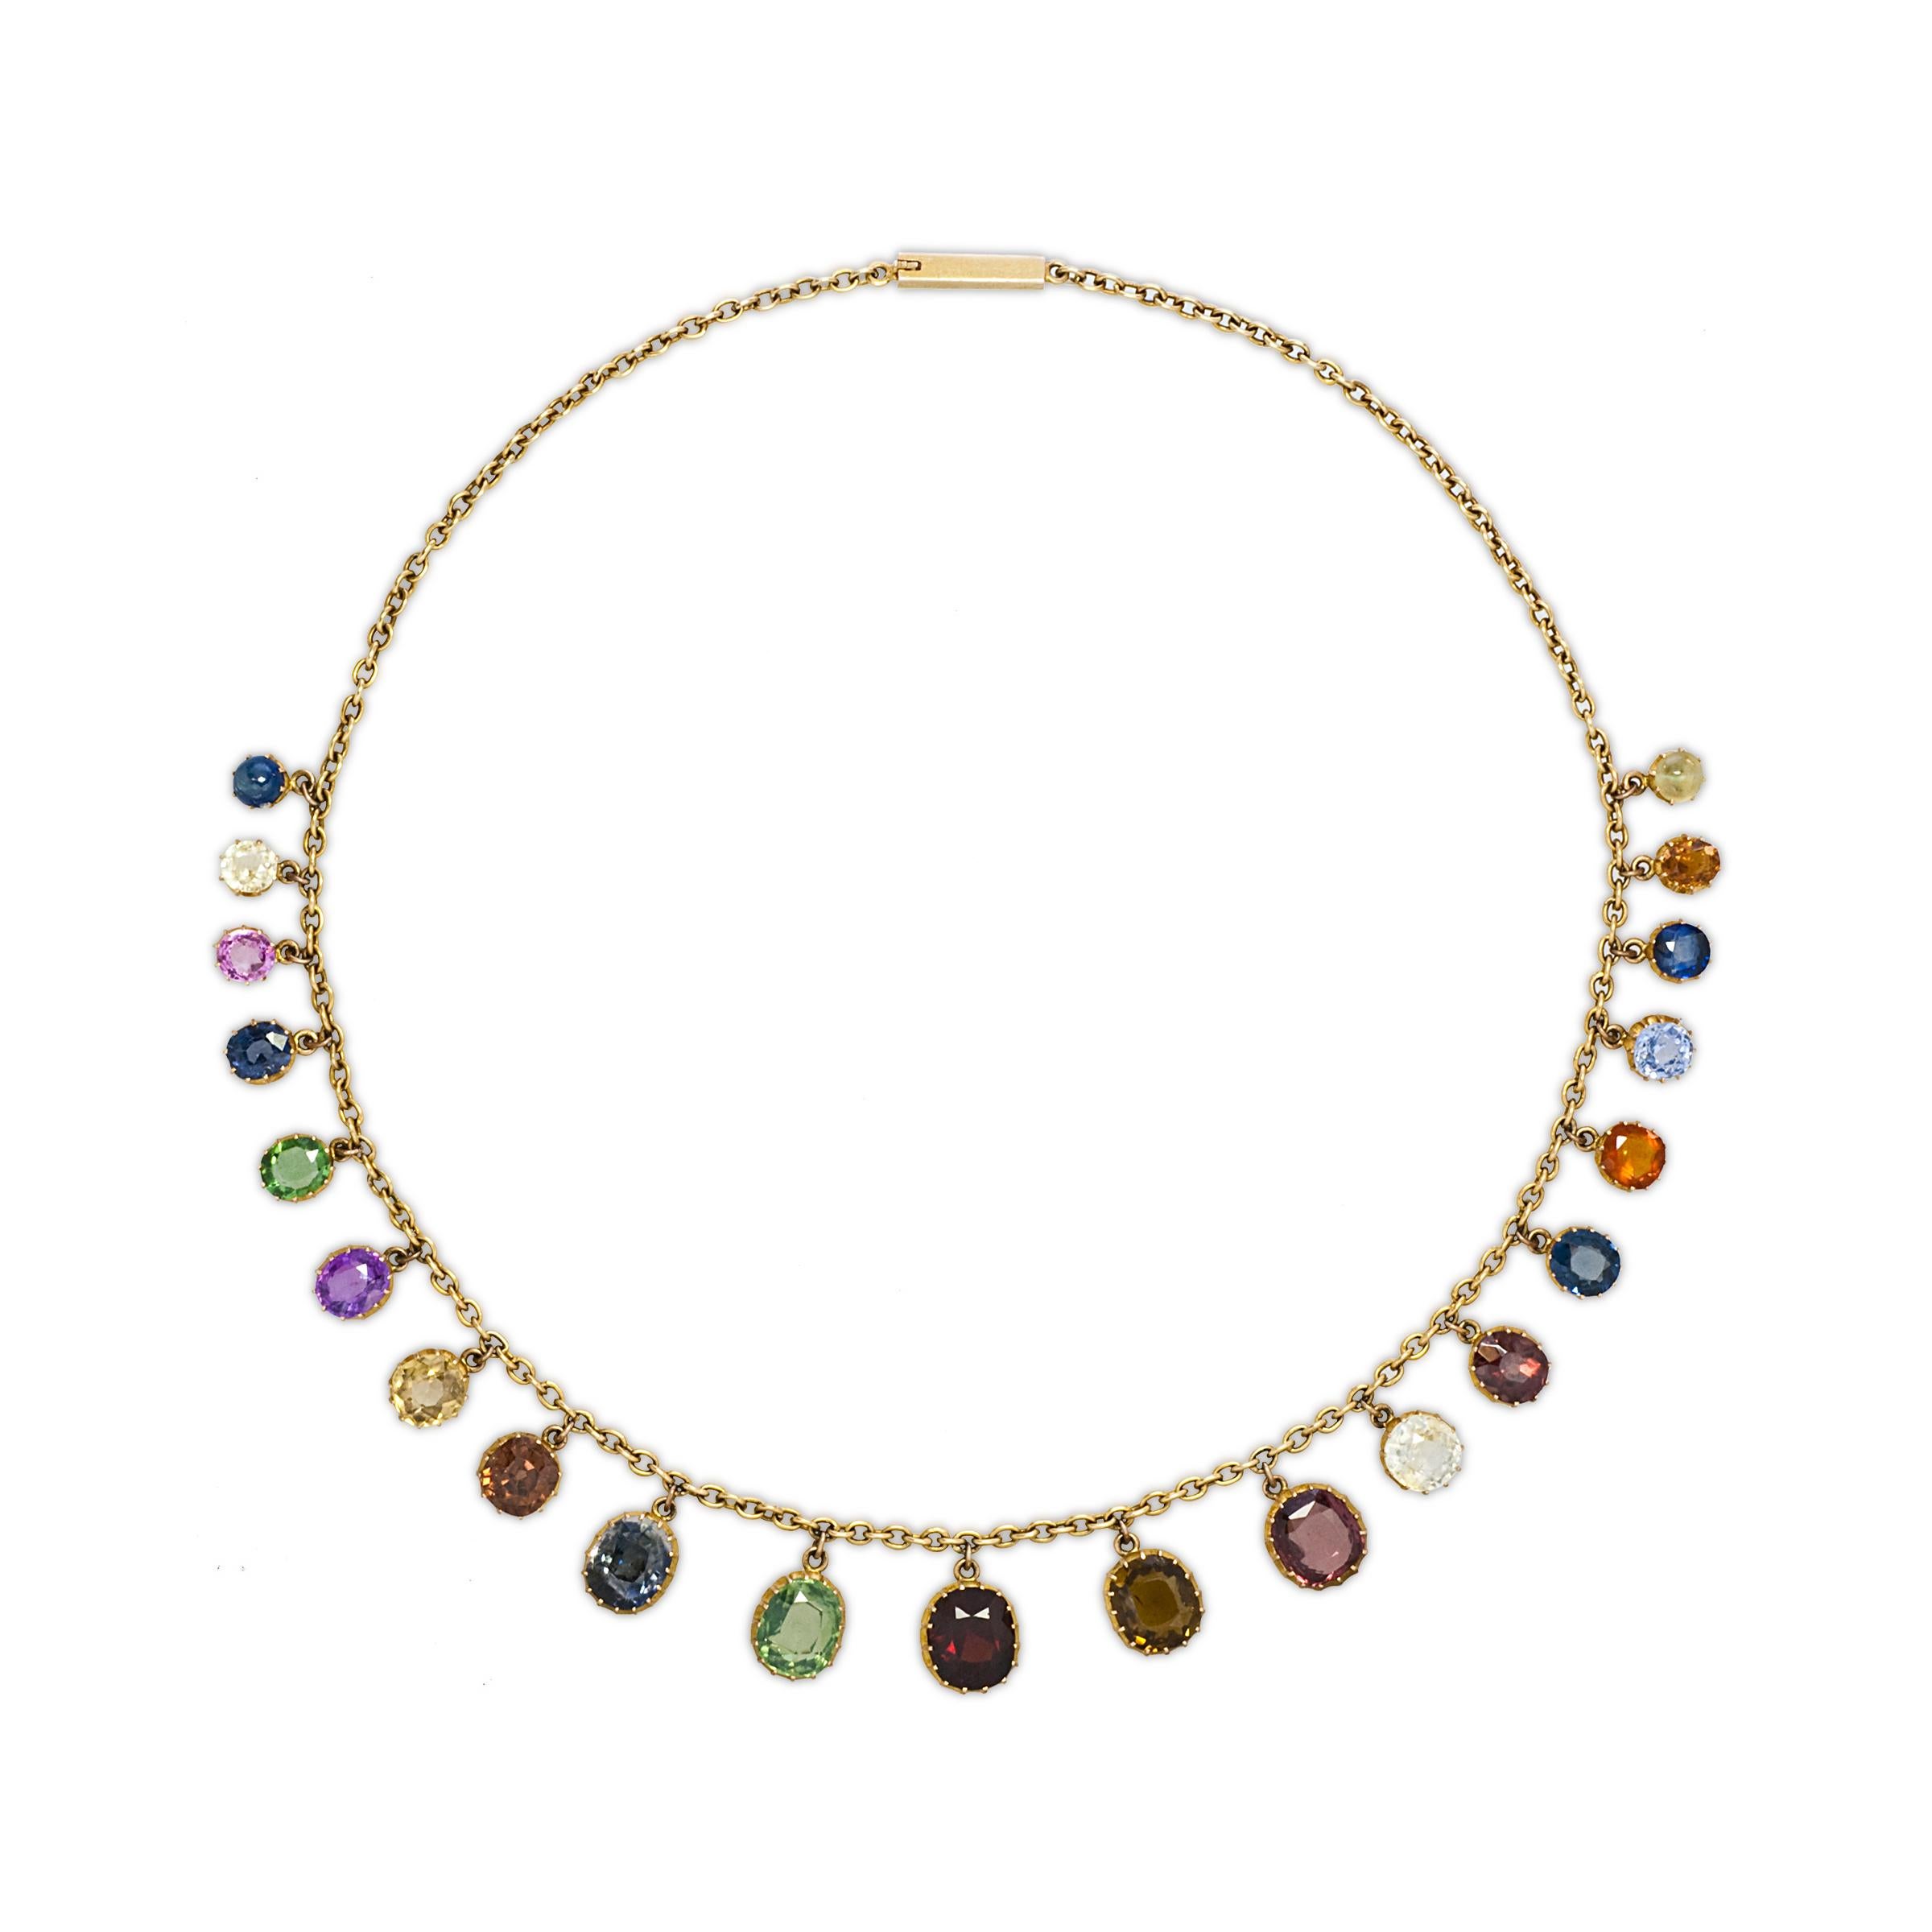 Antique 18K Gold and Multi-Colored Gemset Necklace; circa 1880
21 graduated precious and semi precious gem stones (topaz, amethyst, garnets, citrines, sapphires, tourmalines and zircon.)

